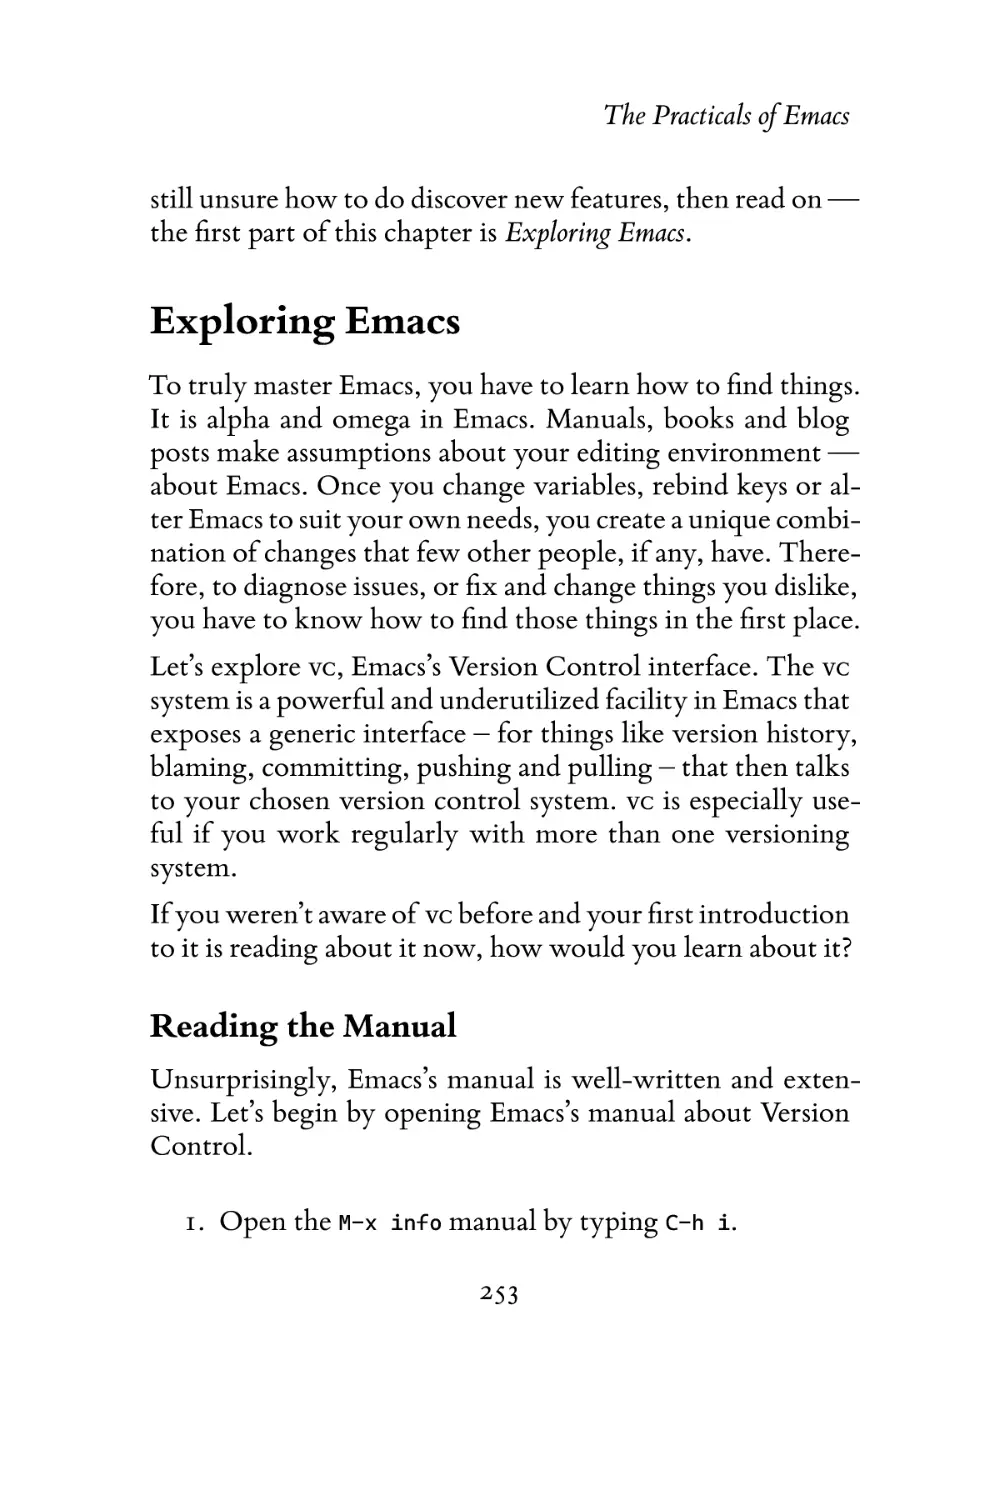 Exploring Emacs
Reading the Manual